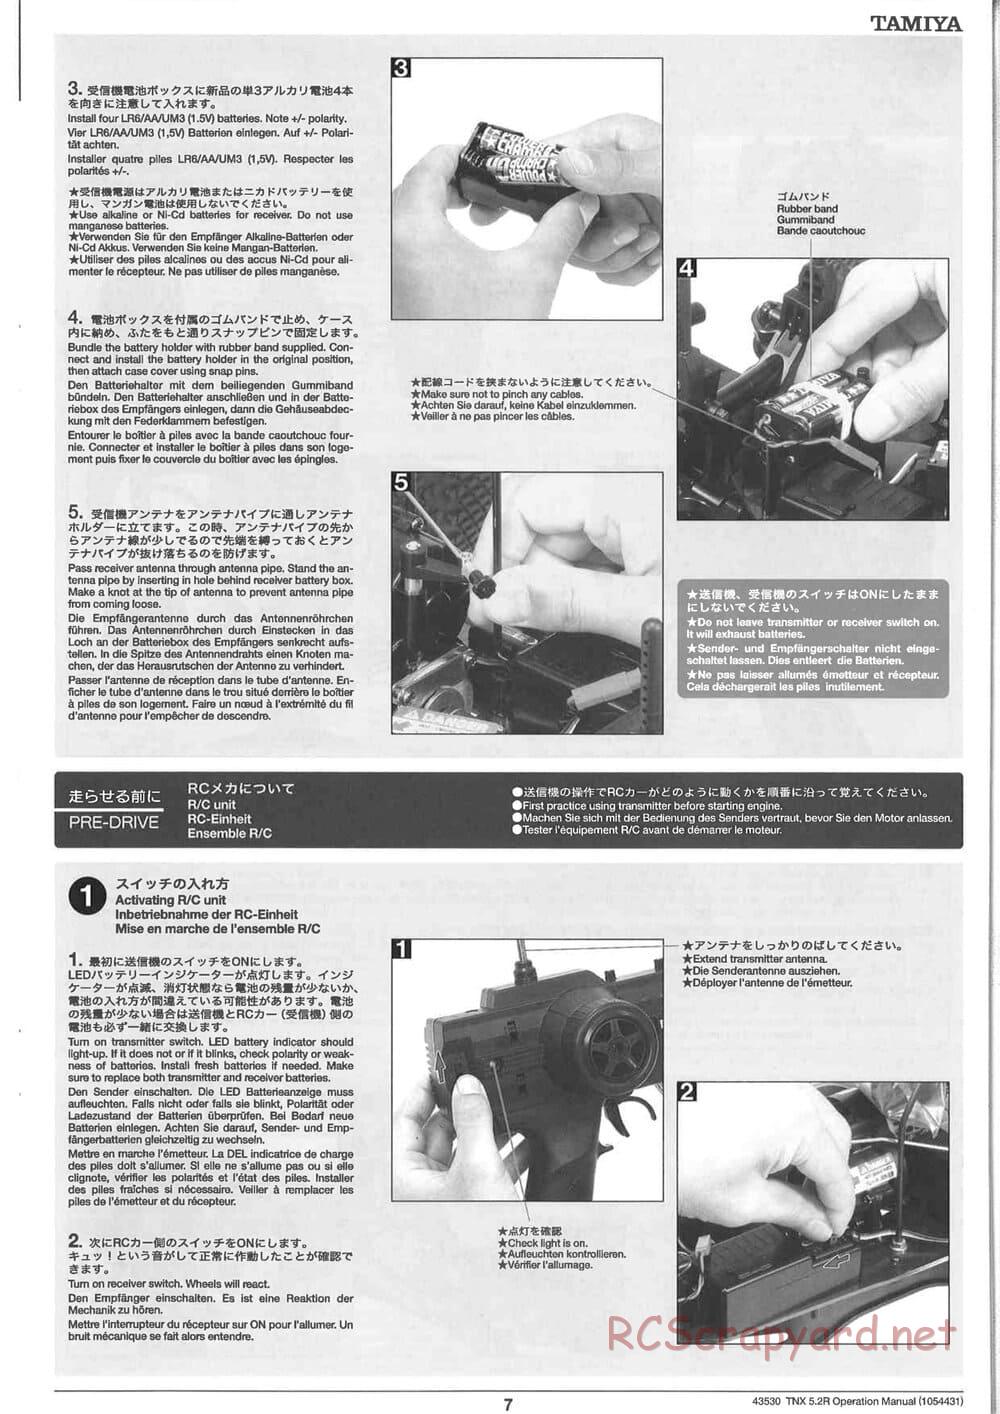 Tamiya - TNX 5.2R - TGM-04 - Operating Manual - Page 7